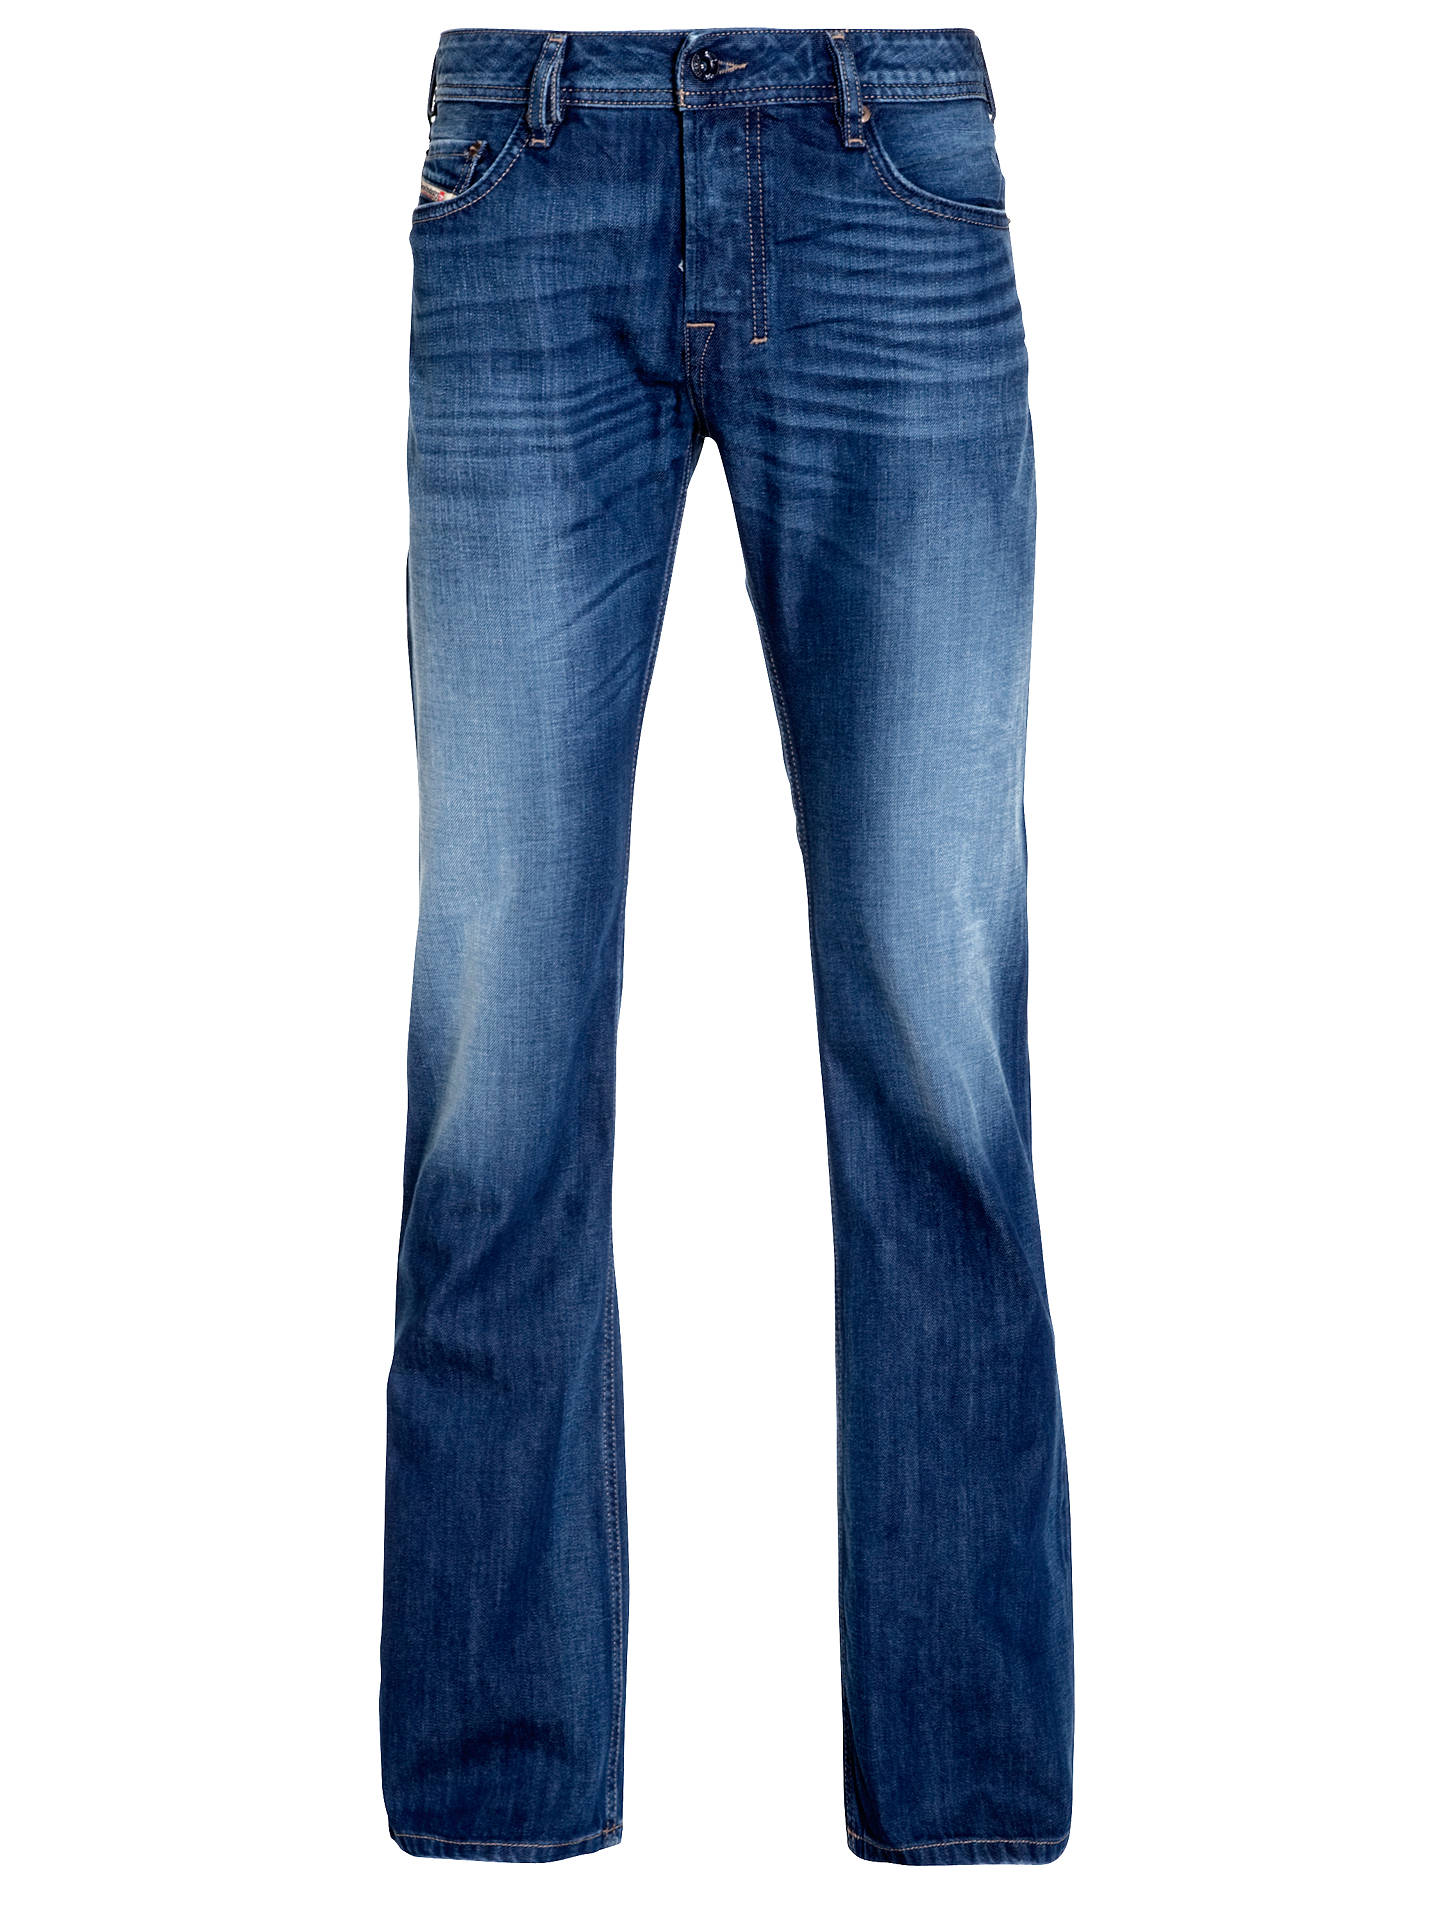 Diesel Zatiny Bootcut Jeans, Blue 8XR at John Lewis & Partners